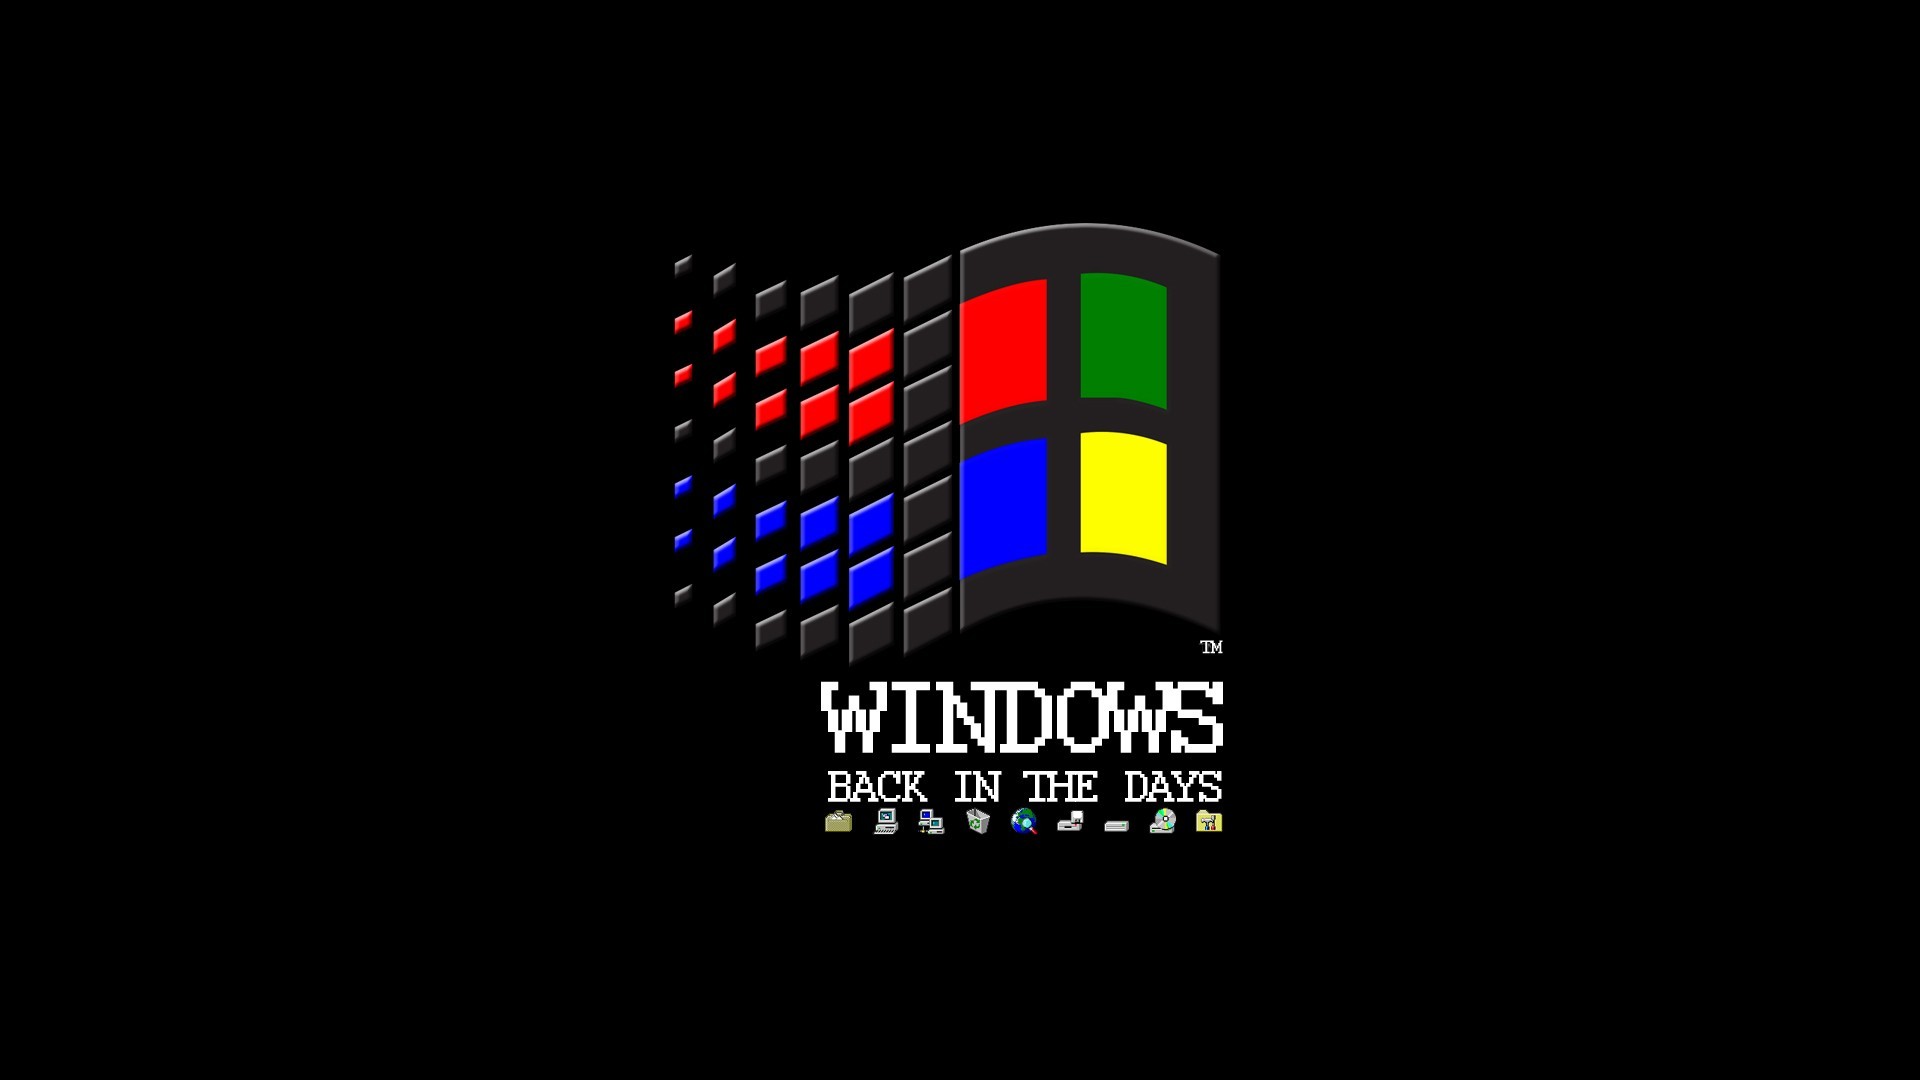 Microsoft Windows Vintage Logo Black Background Floppy Disk Ms Dos